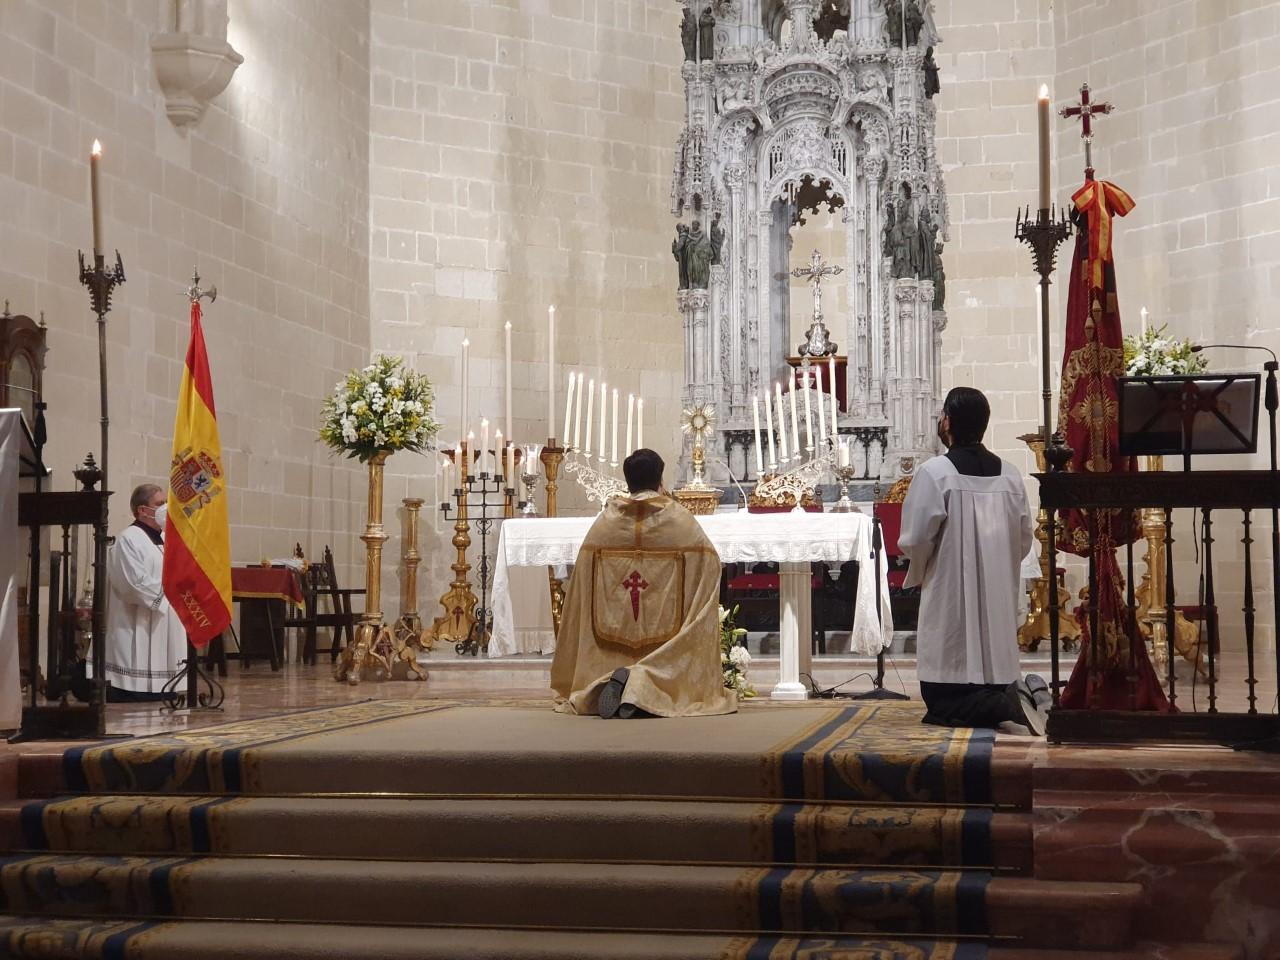 La Sacramental abre el telón eucarístico de Jerez